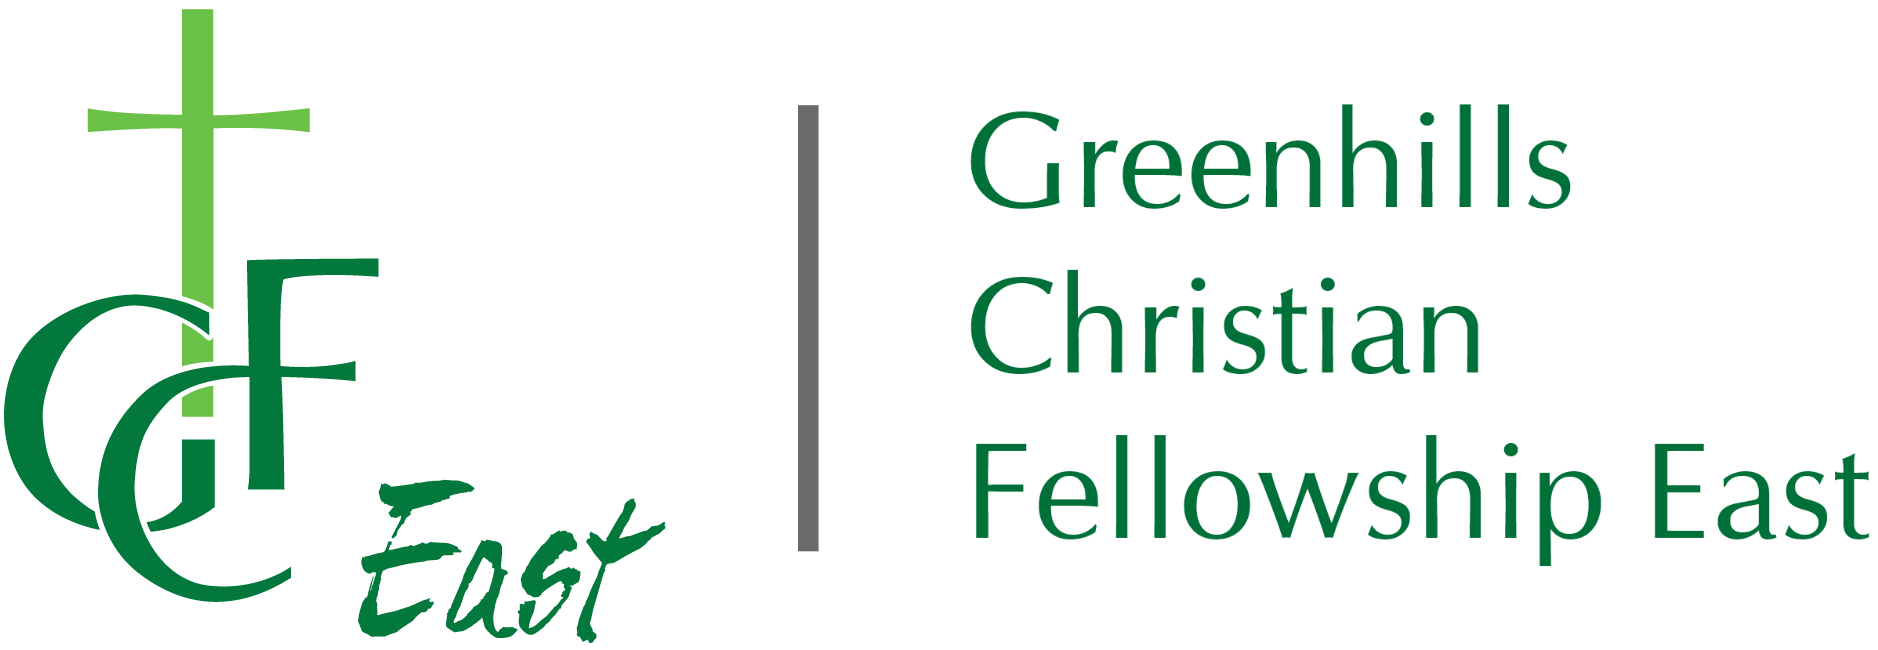 Greenhills Christian Fellowship East